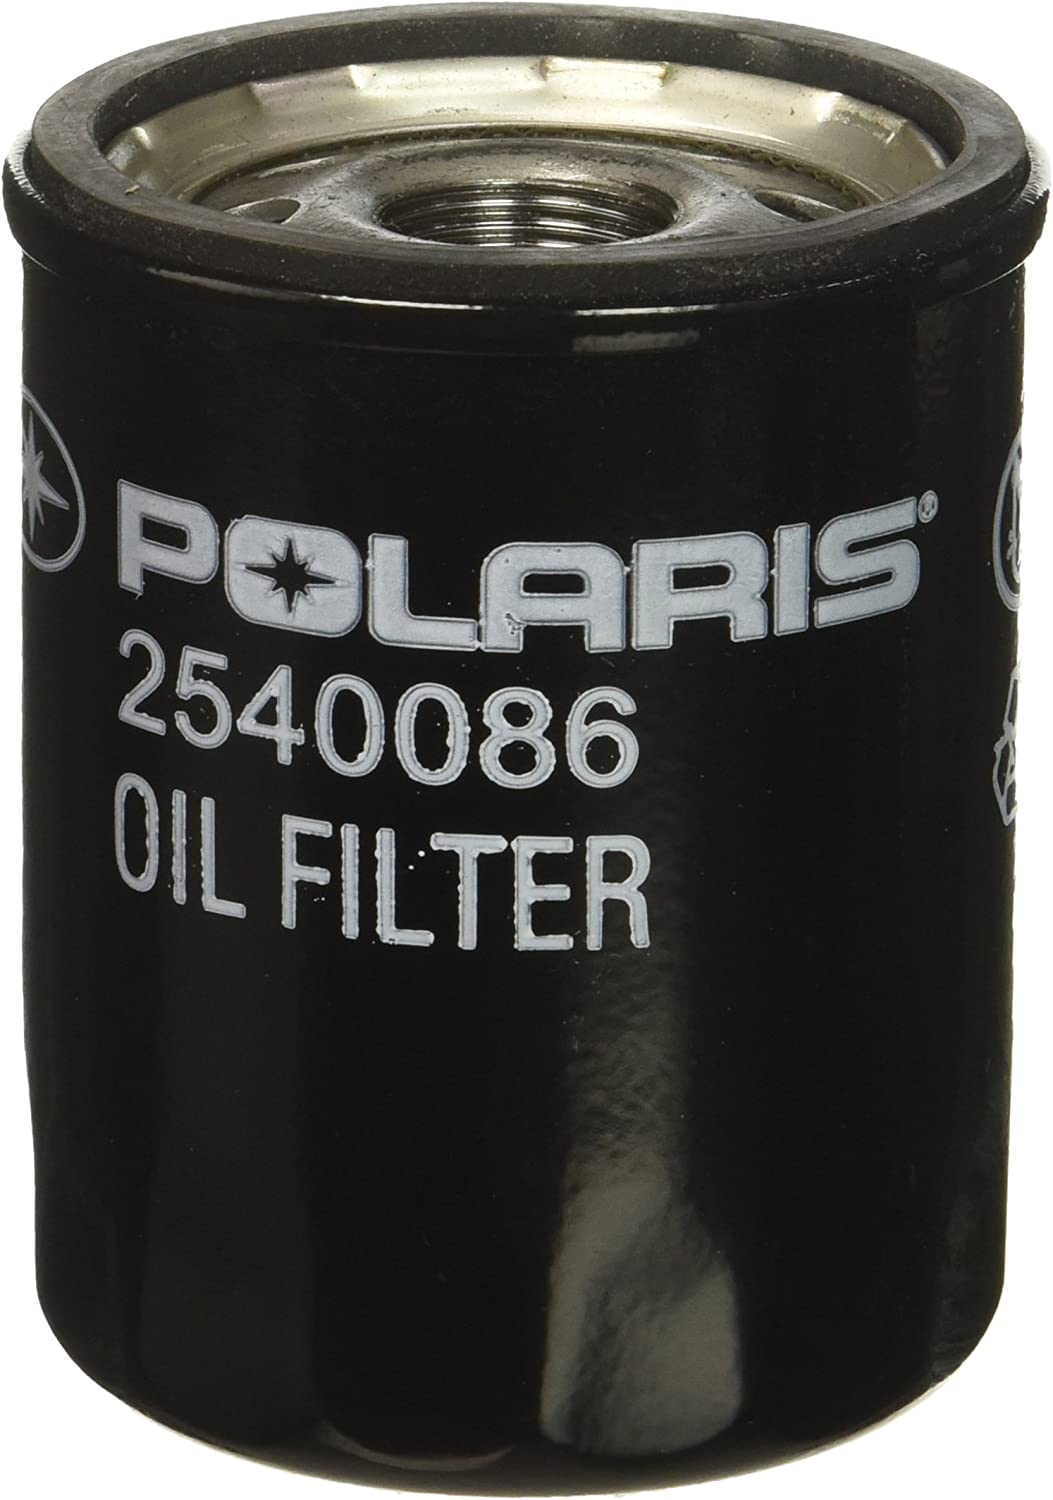 Polaris Oil Filter 2540086